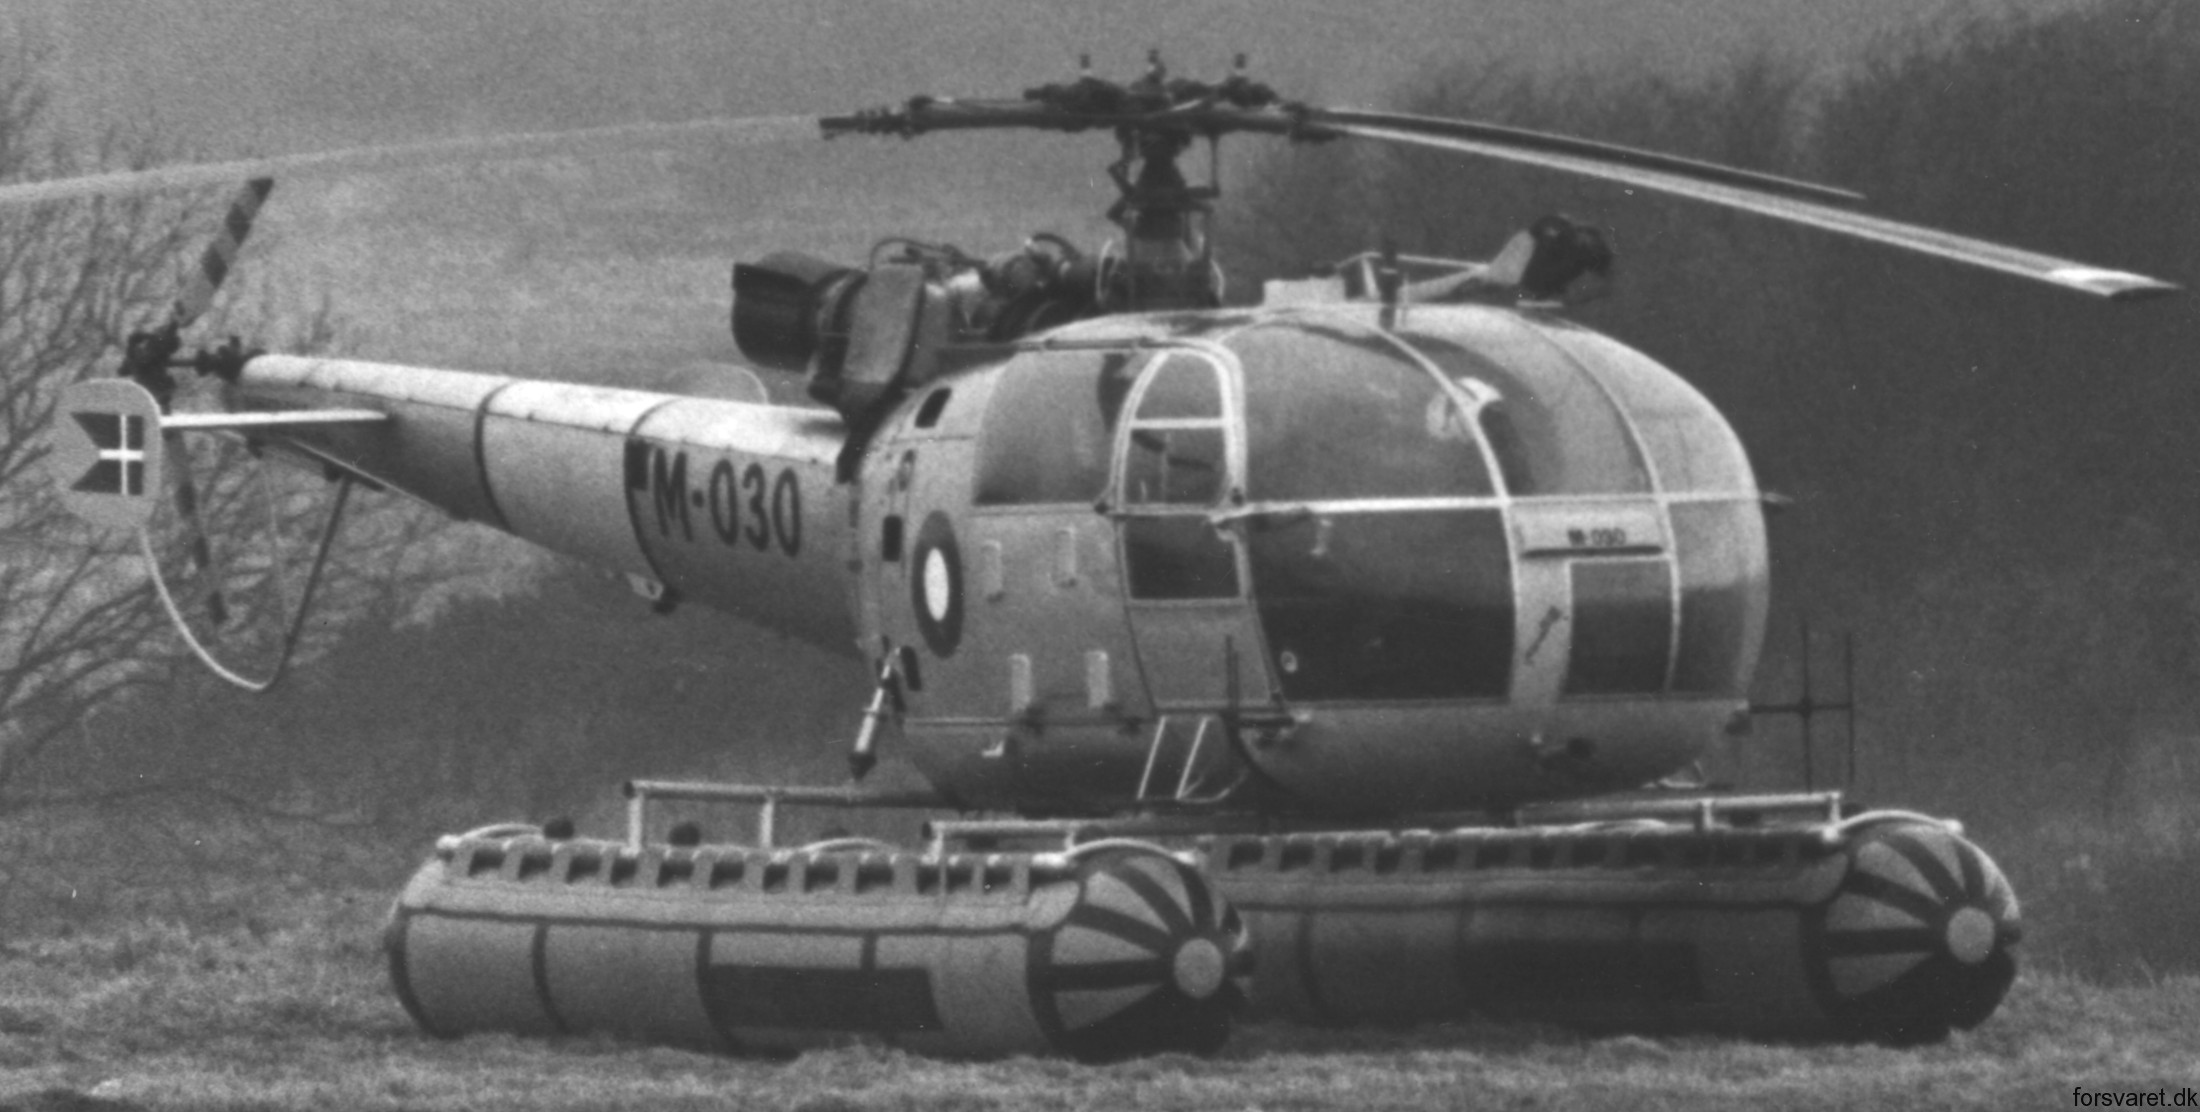 sa 316b alouette iii helicopter royal danish navy søværnet kongelige danske marine sud aviation m-030 07